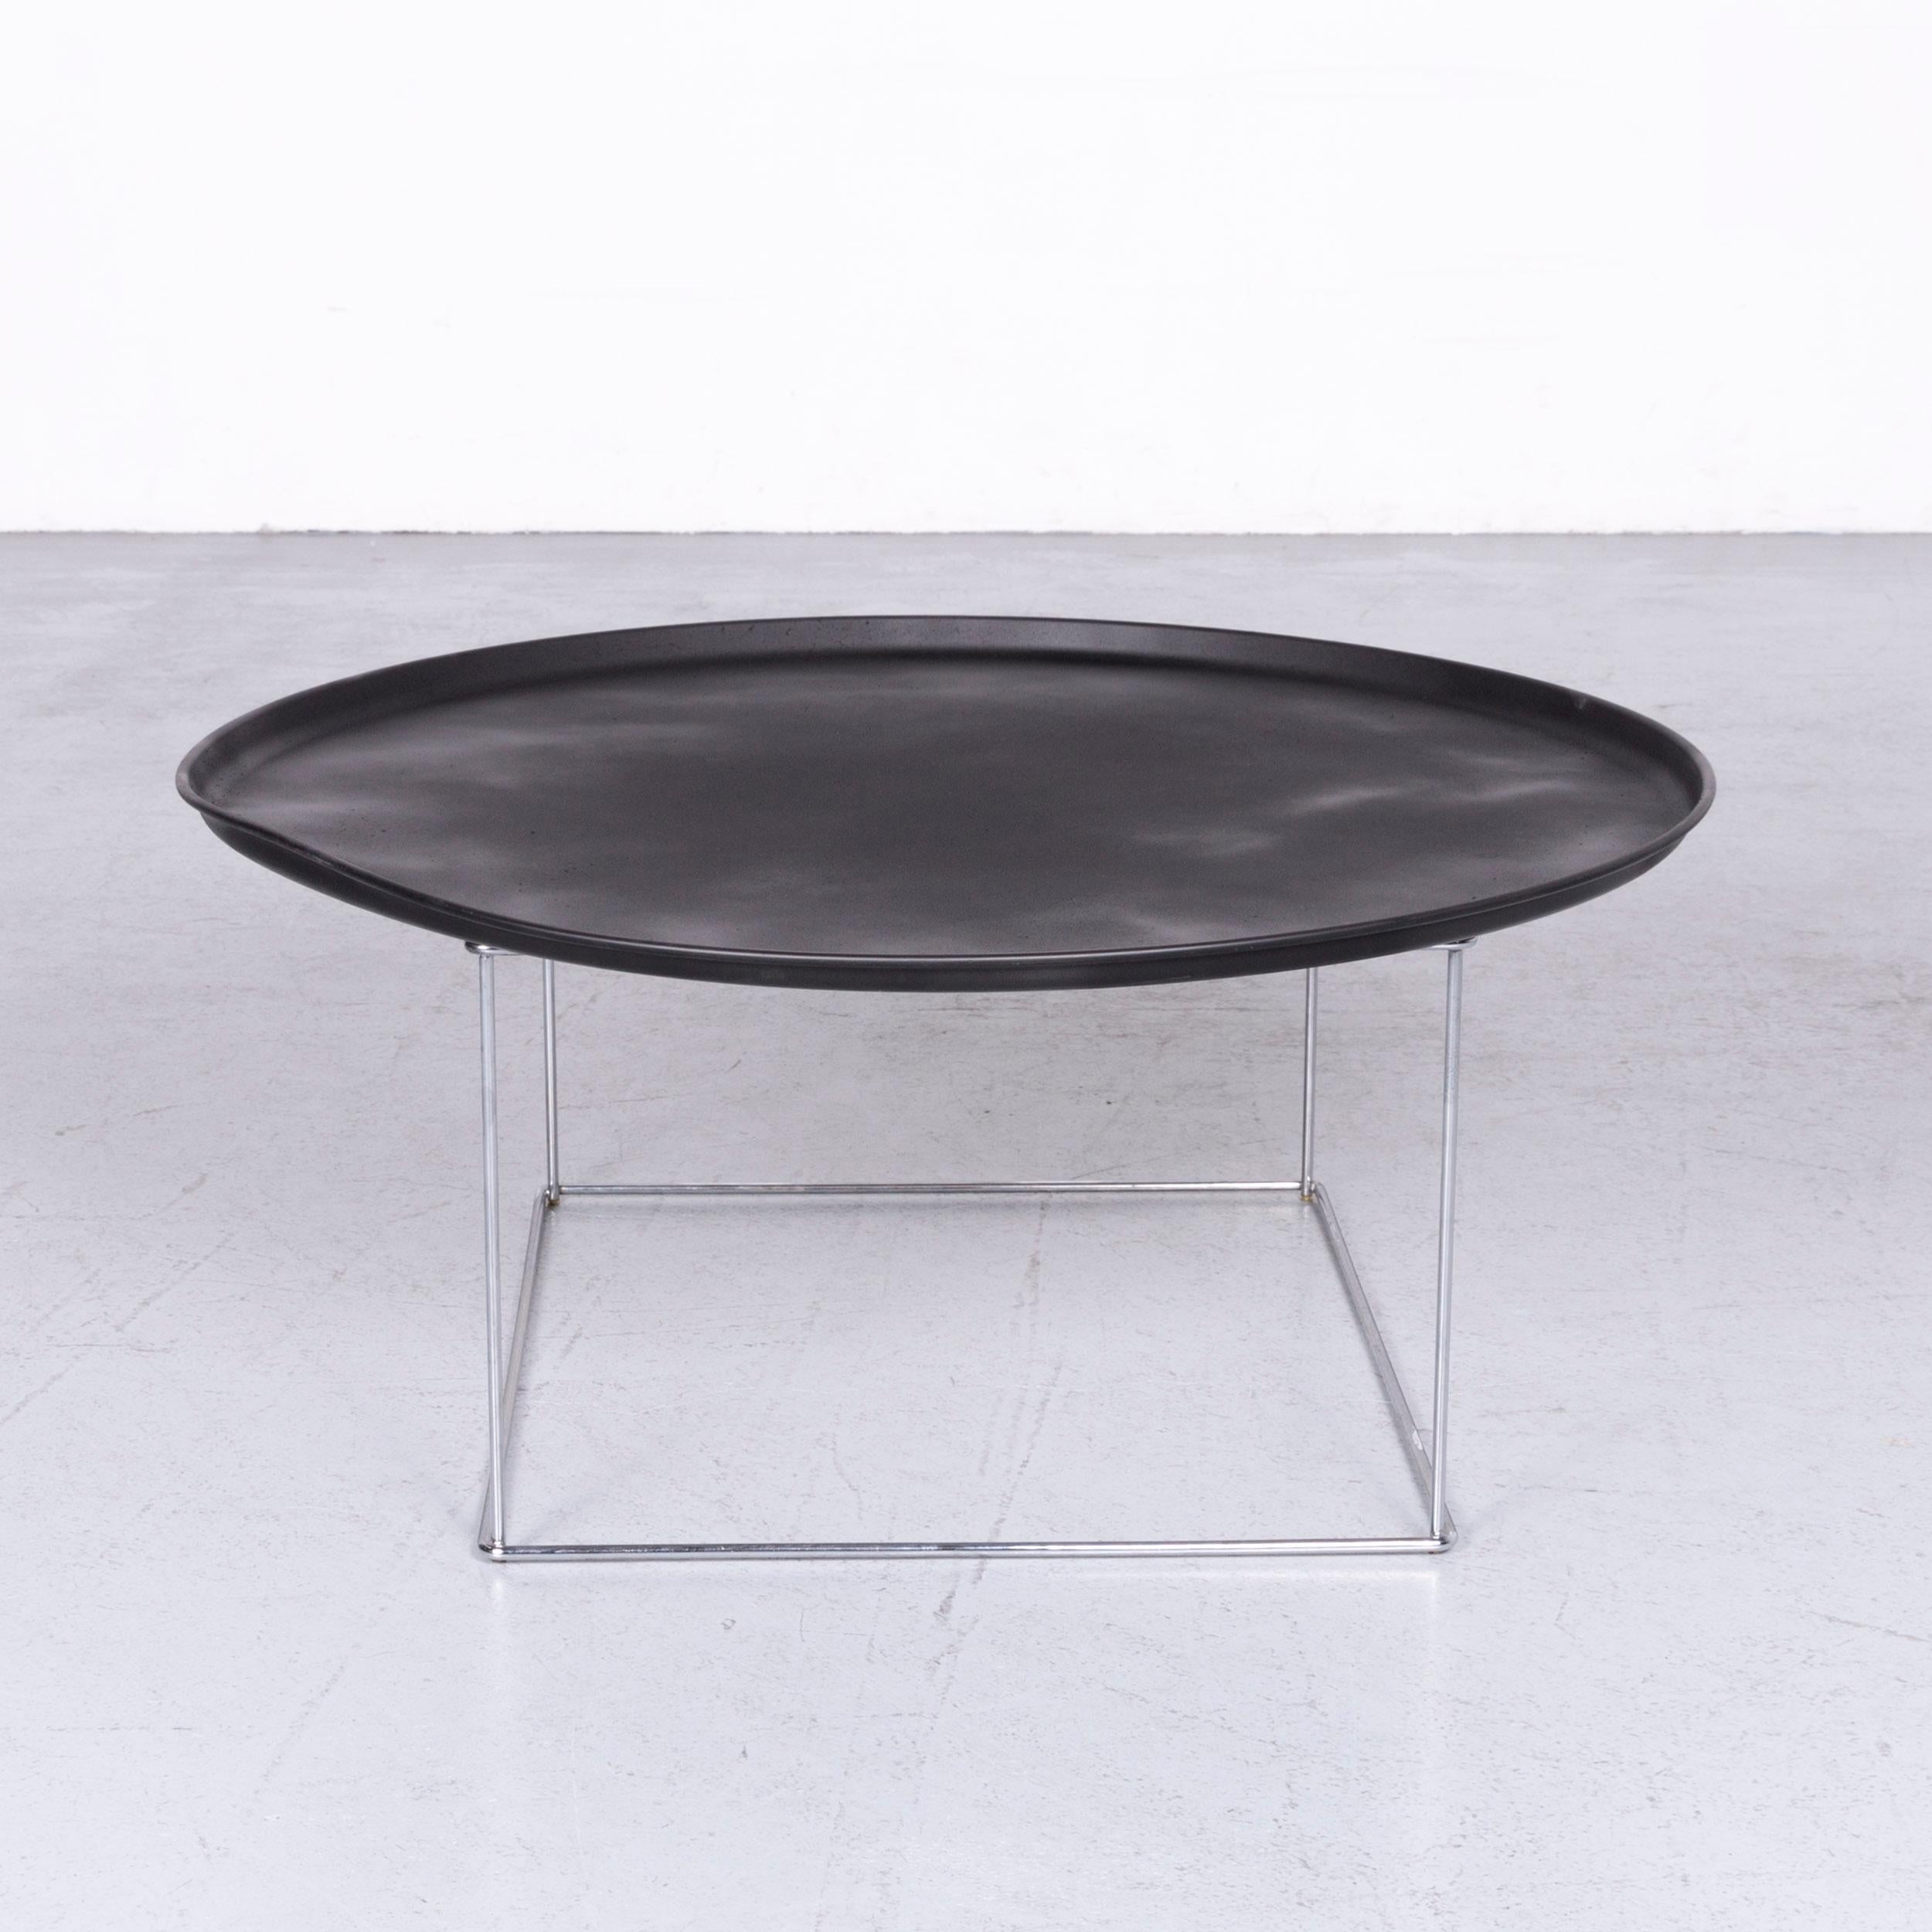 We bring to you a B&B Italia fat-fat designer table black metal coffee table.